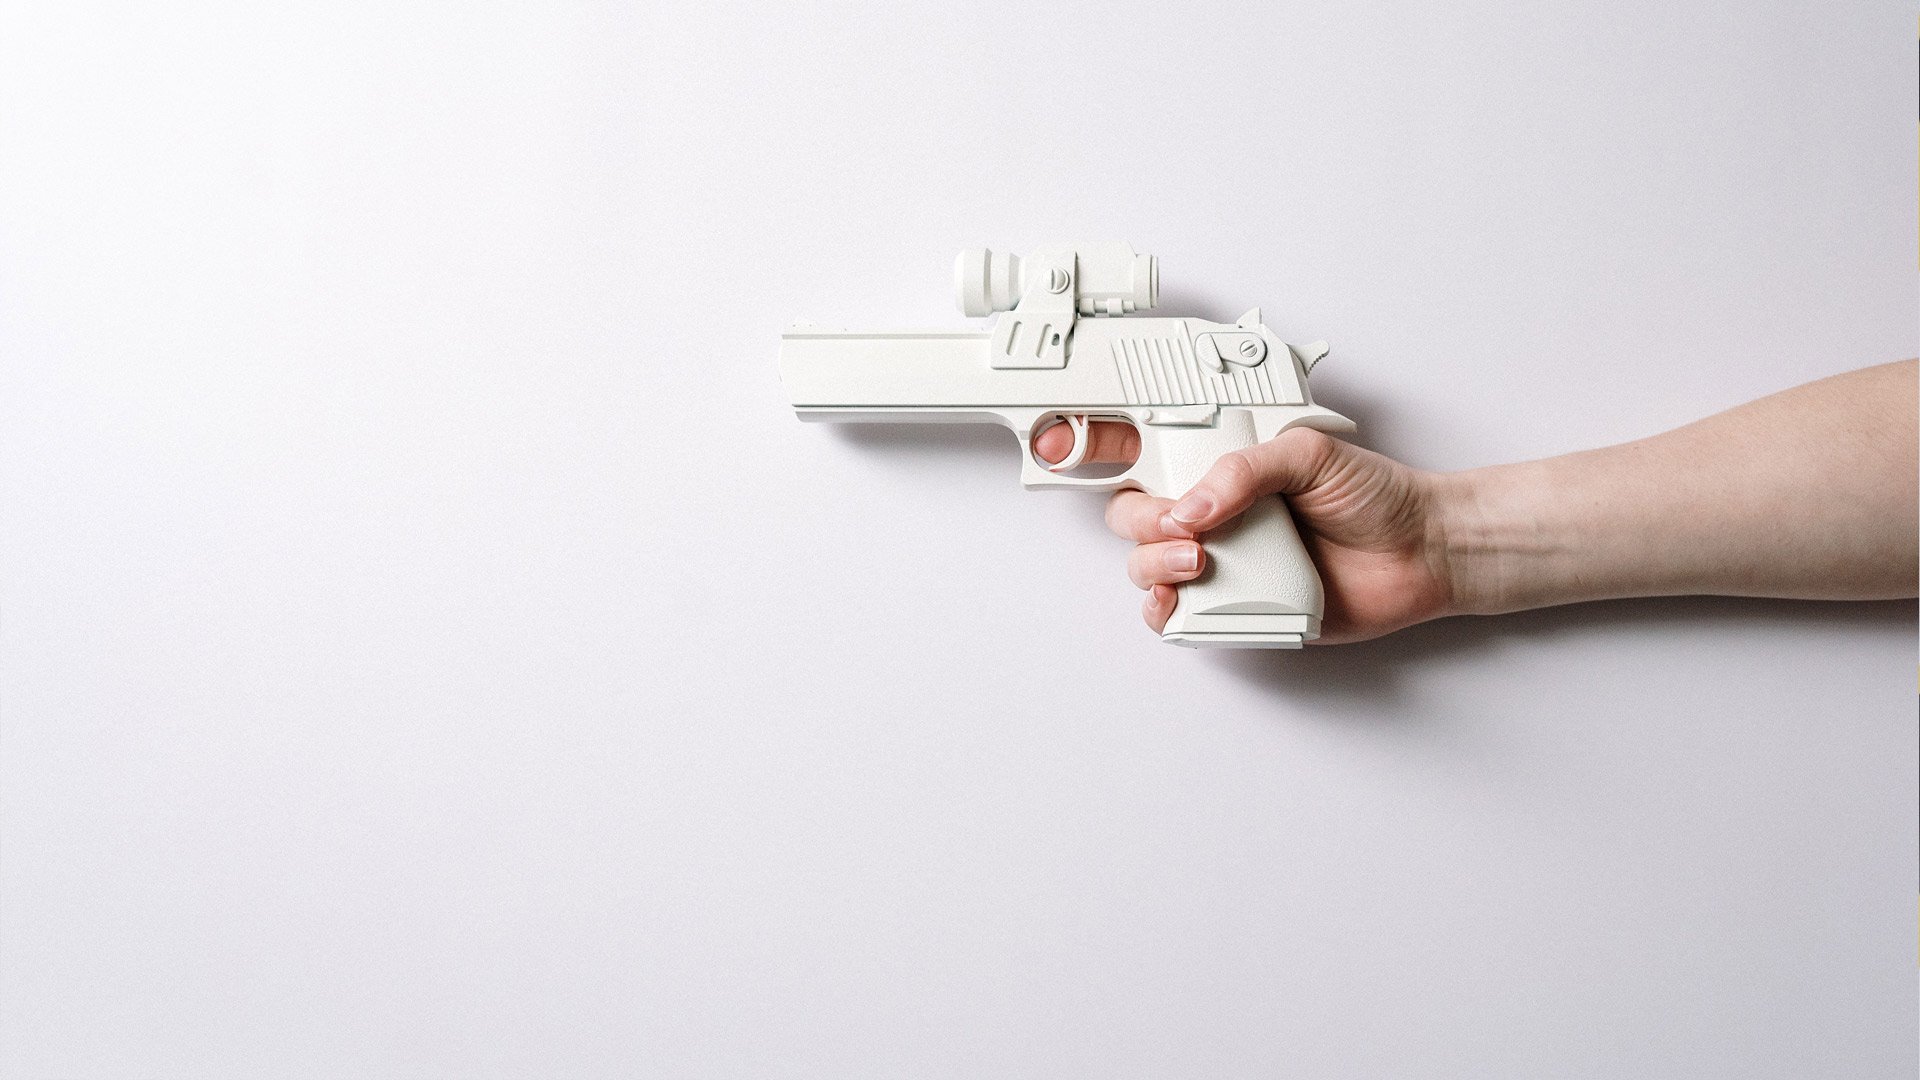 3D Guns: Origins, Legality, Types & Status All3DP